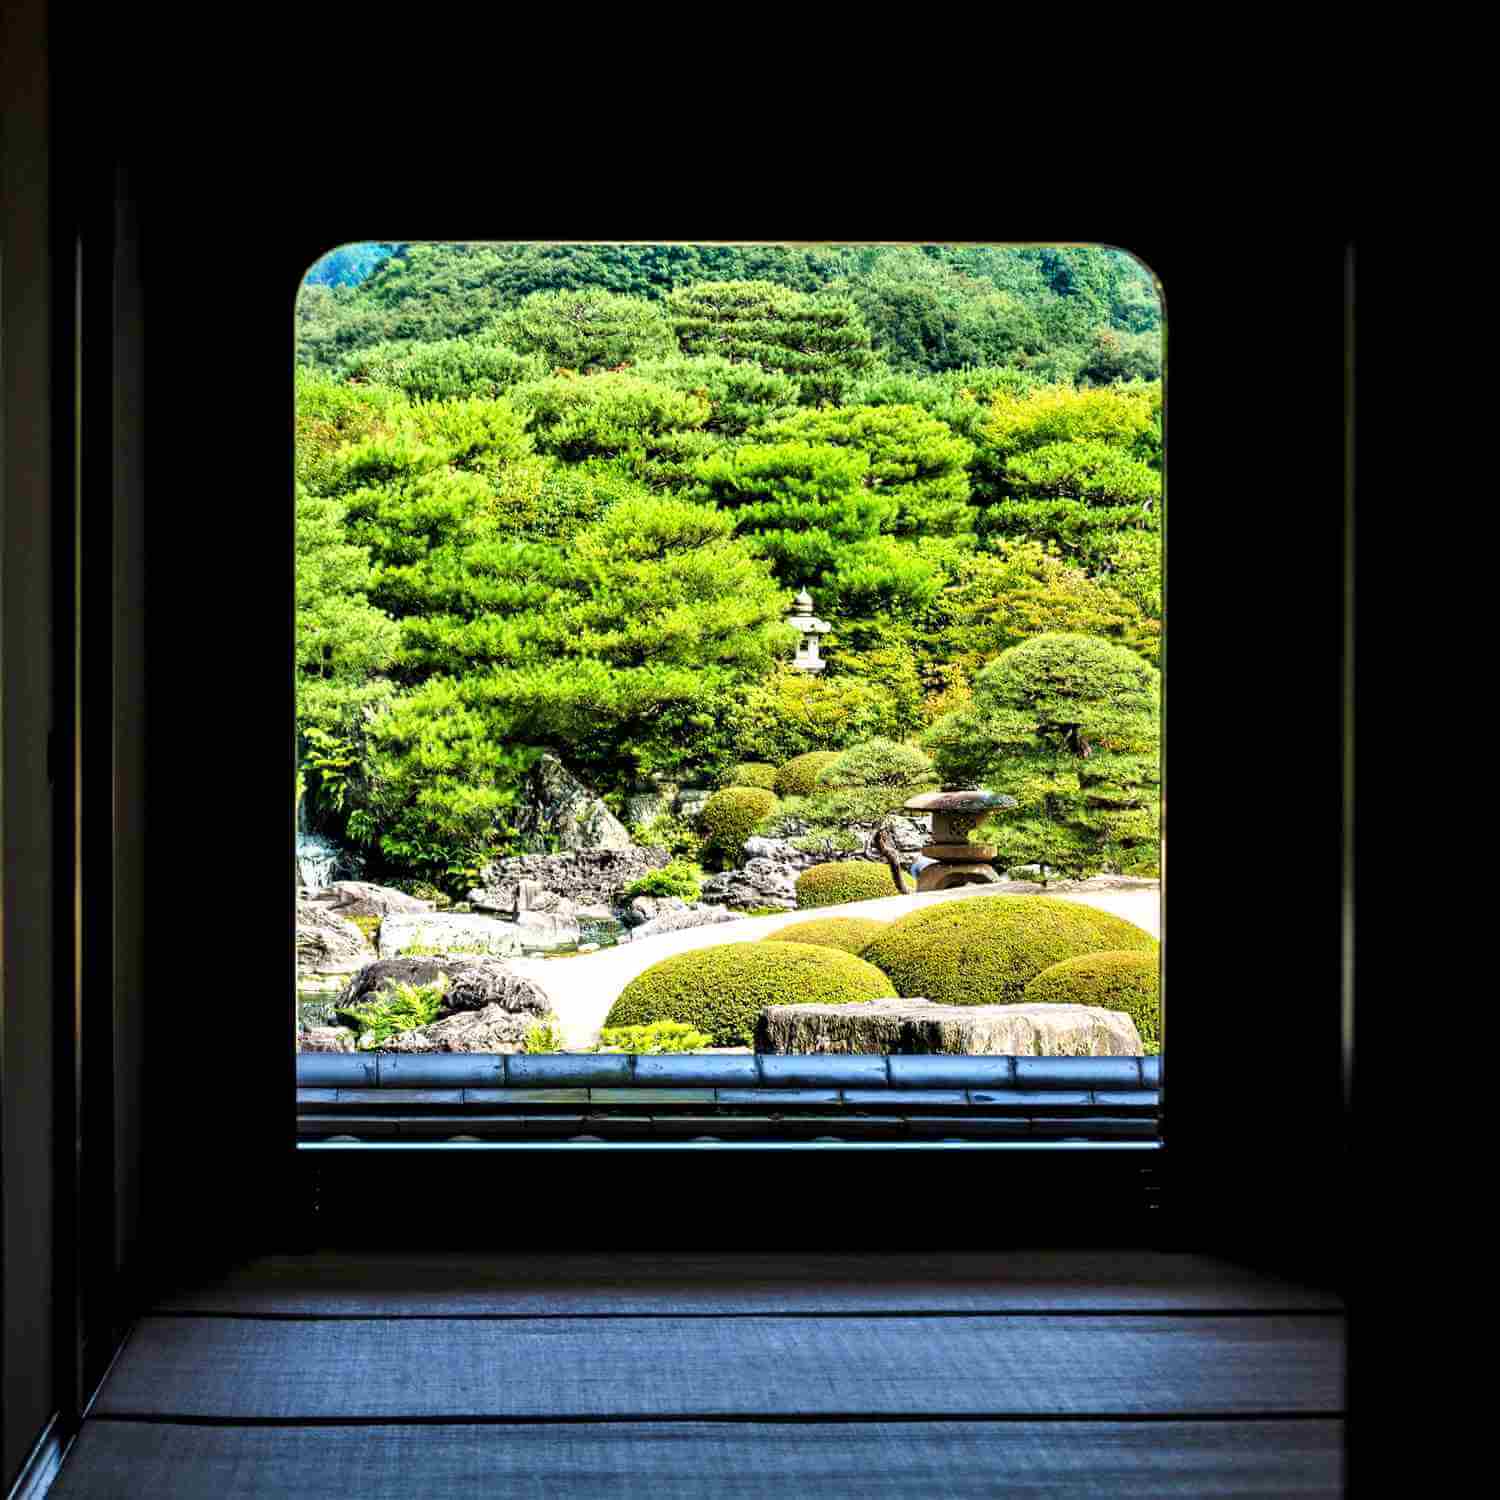 Adachi Museum famous for its beautiful Japanese garden = Shutterstock